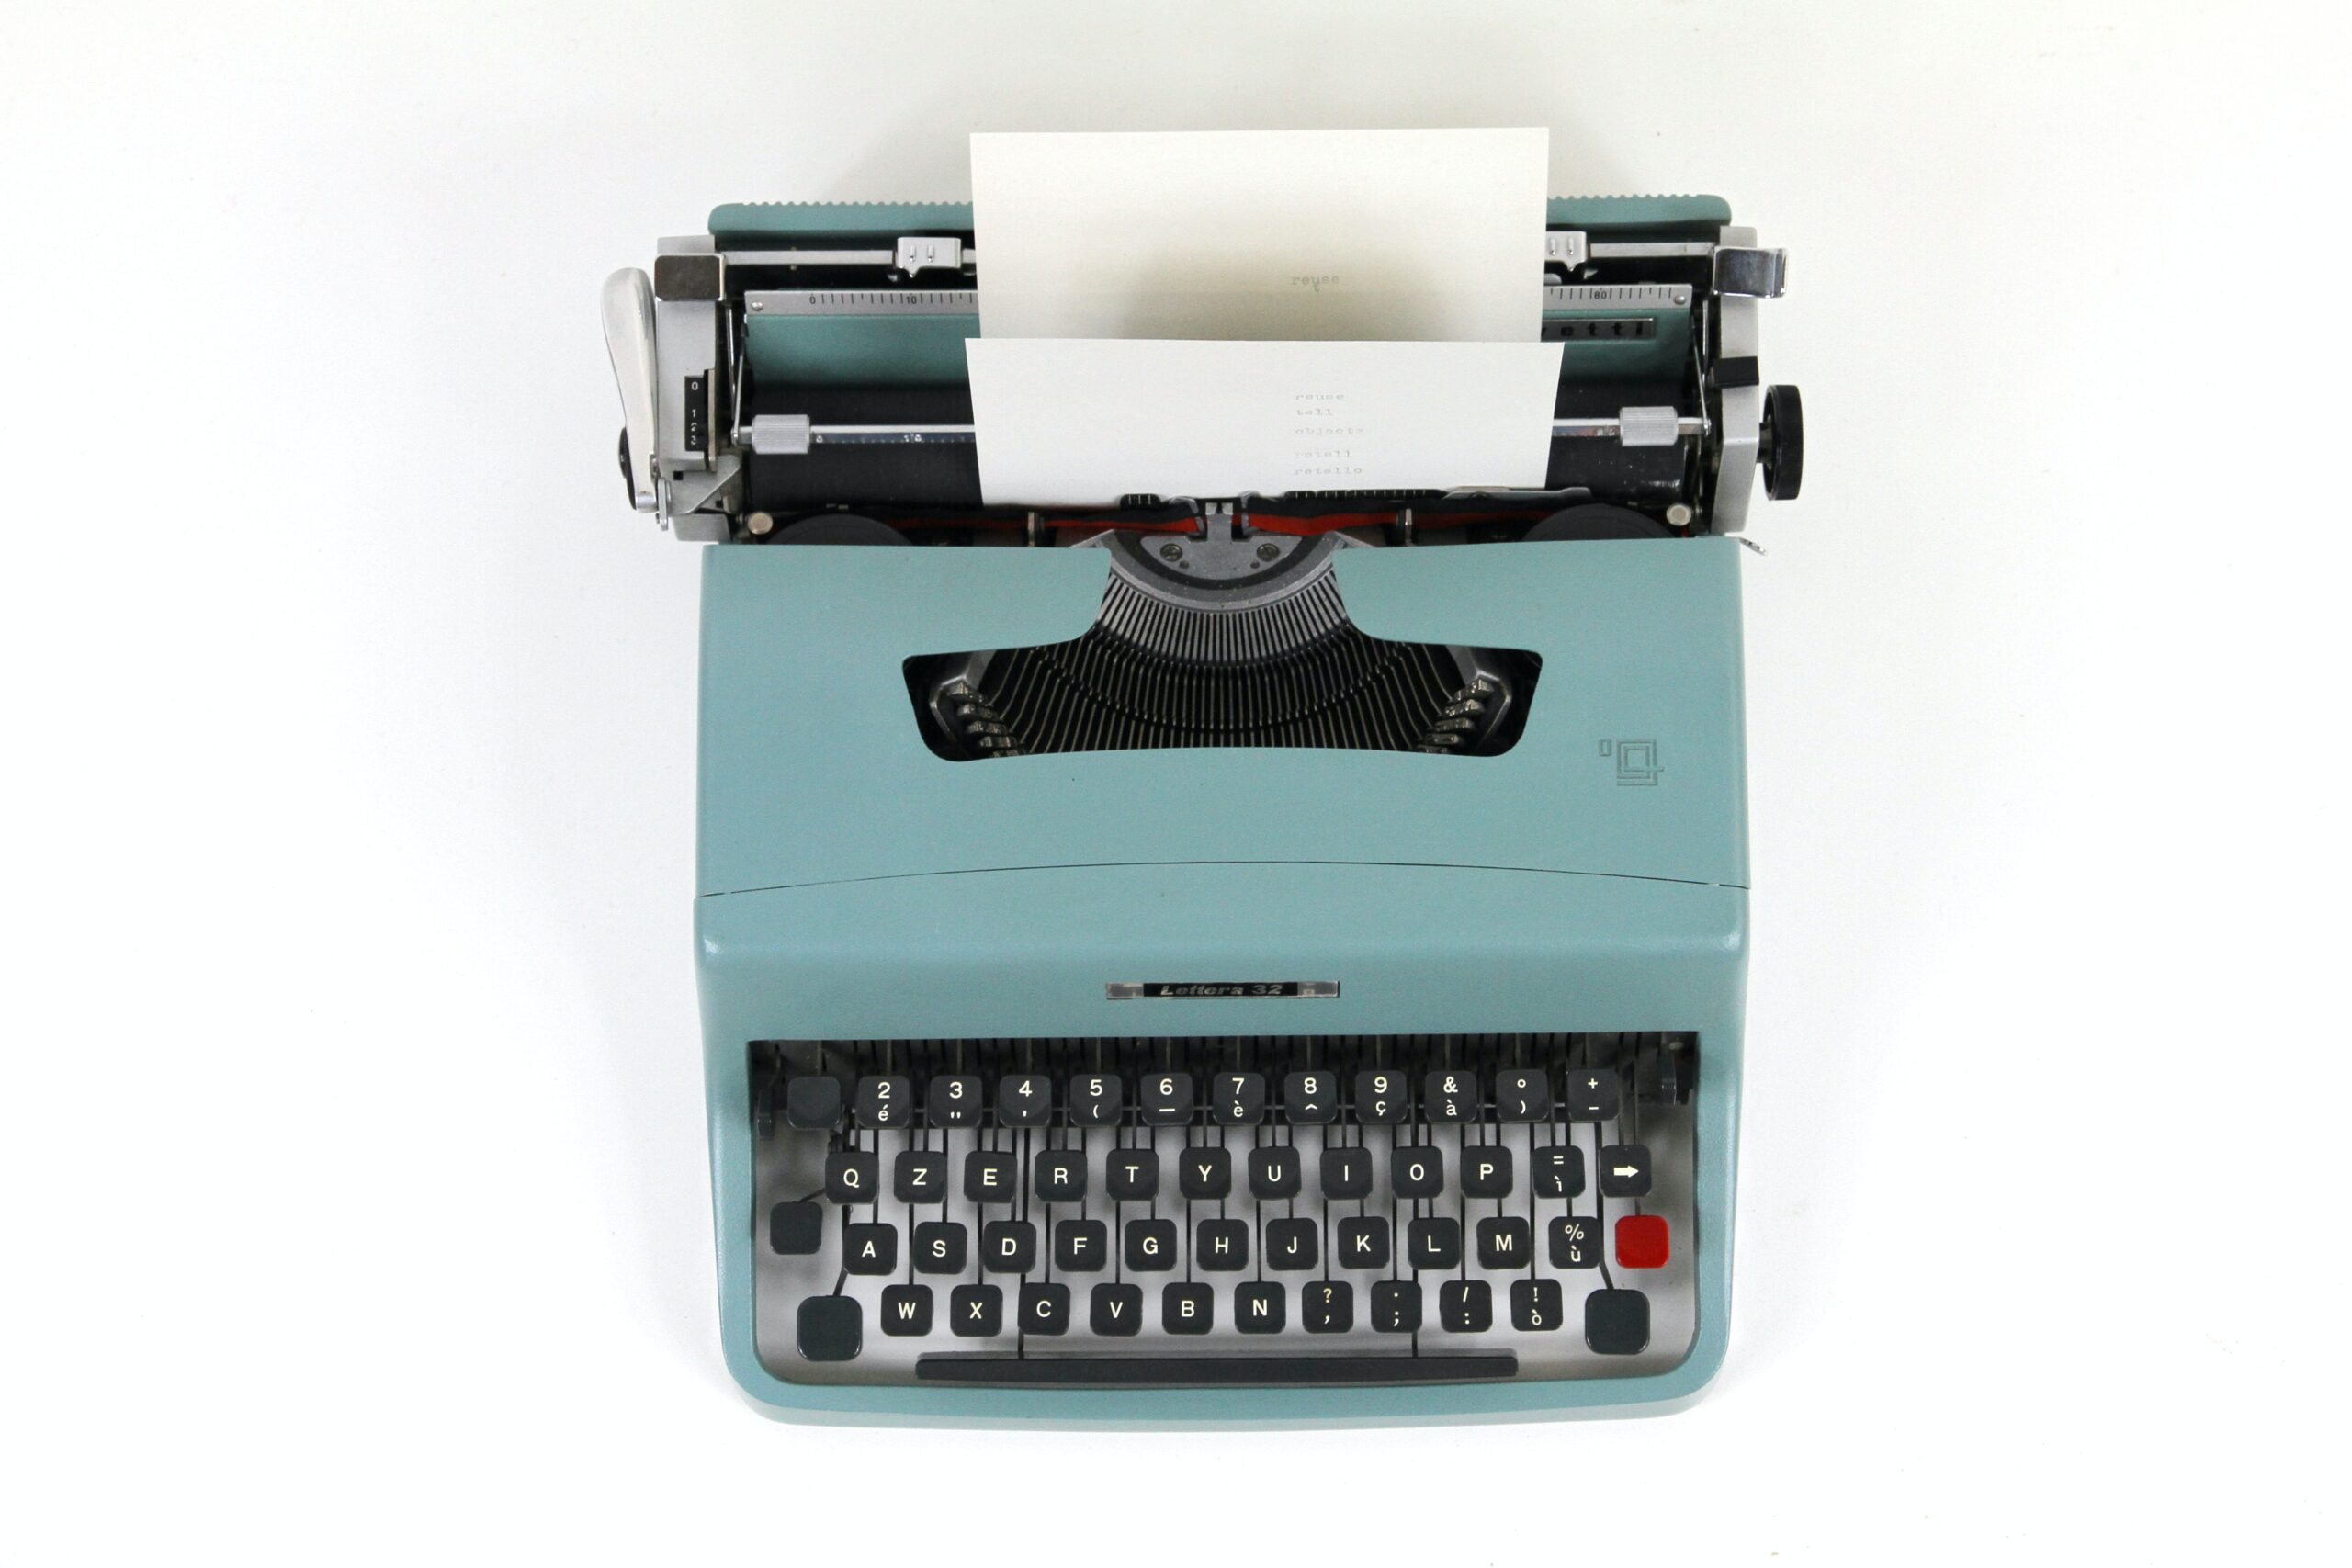 Light blue typewriter from a bird's eye view.